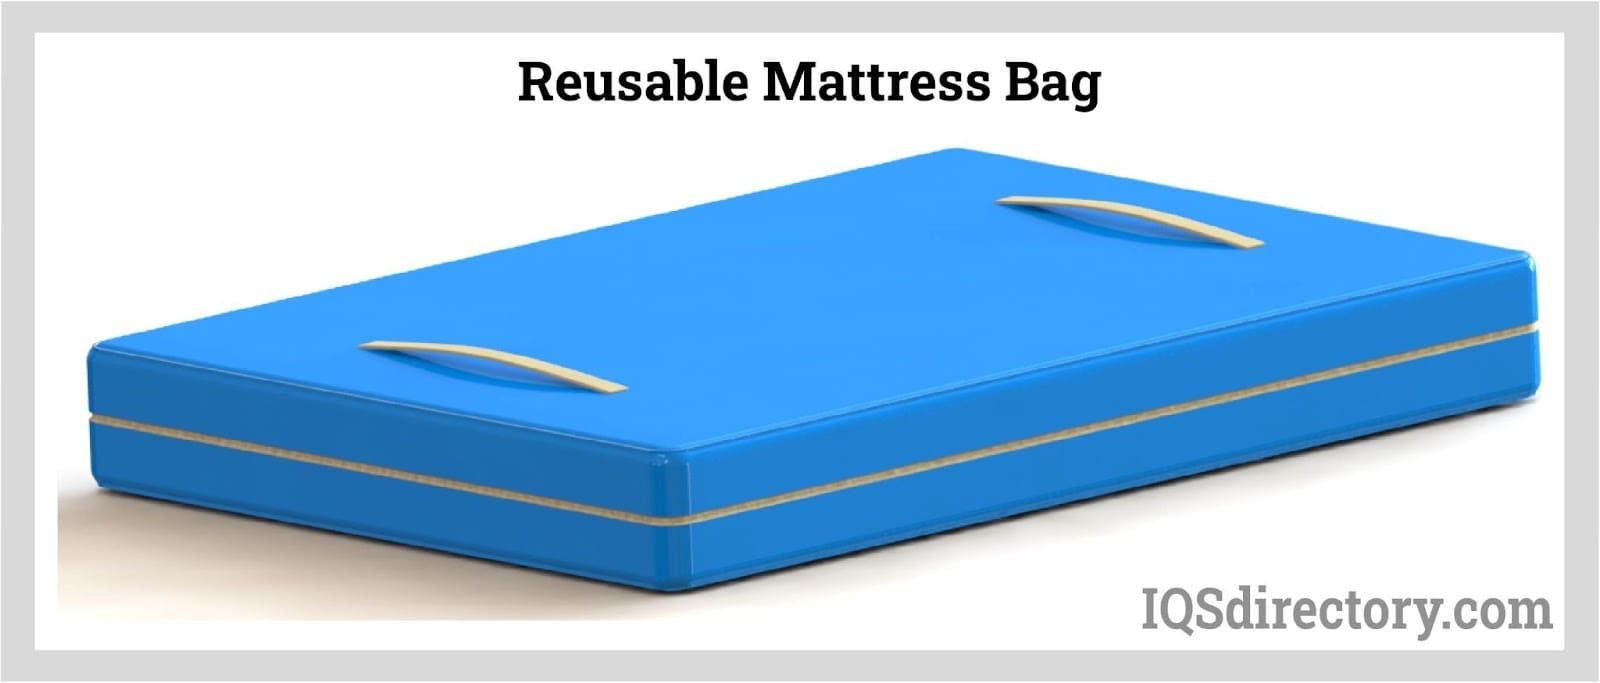 Reusable Mattress Bag